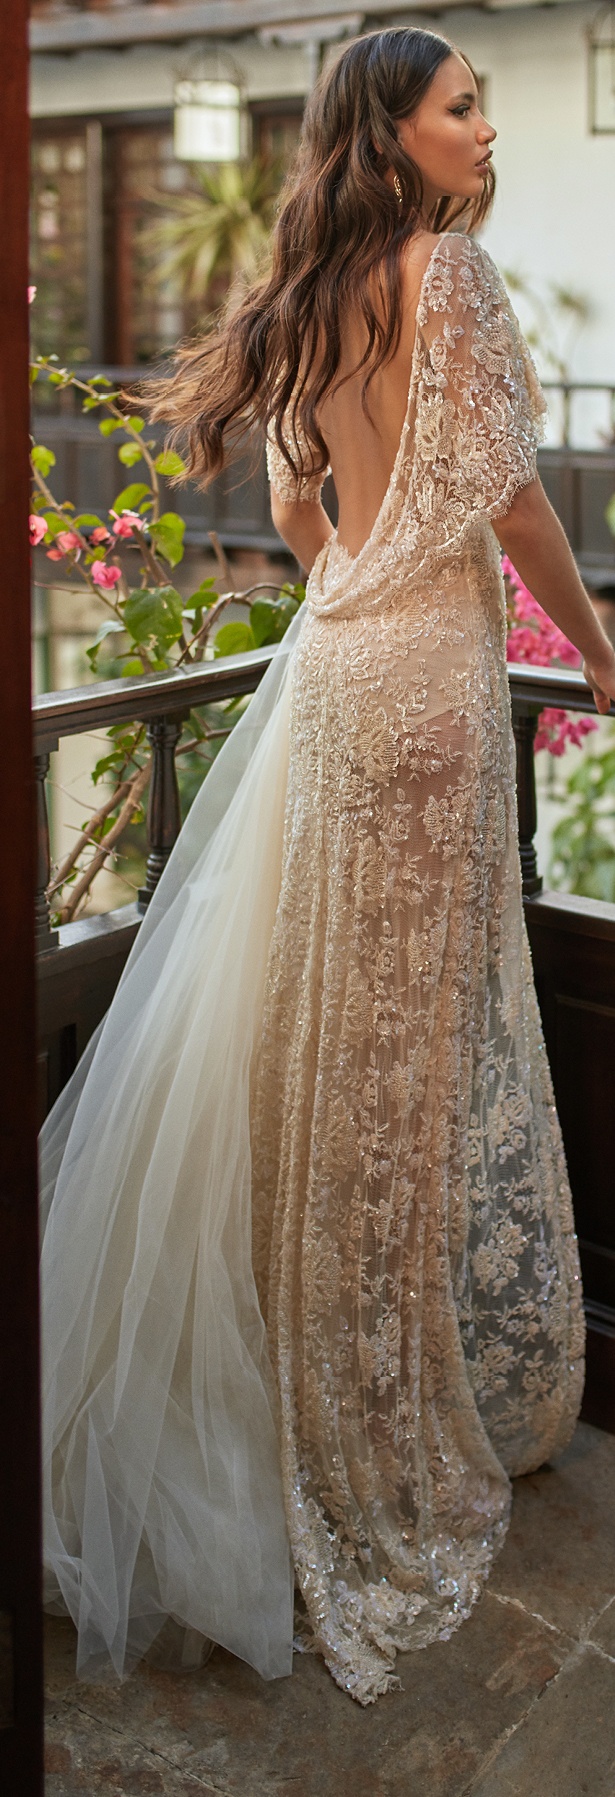 Galia Lahav Couture Bridal Fall 2018 Collection - Hey Wedding Lady